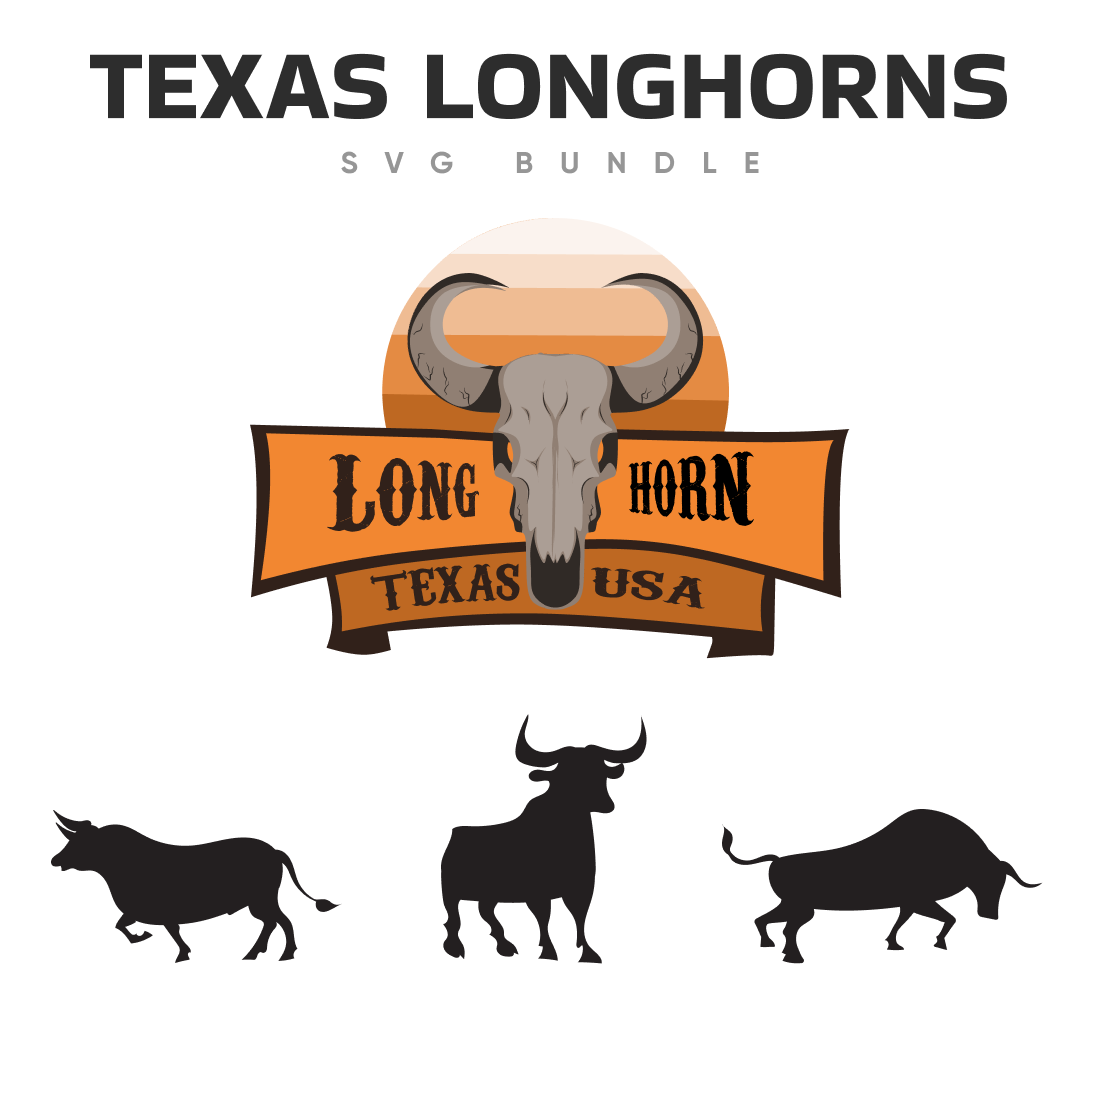 Texas longhorns svg.